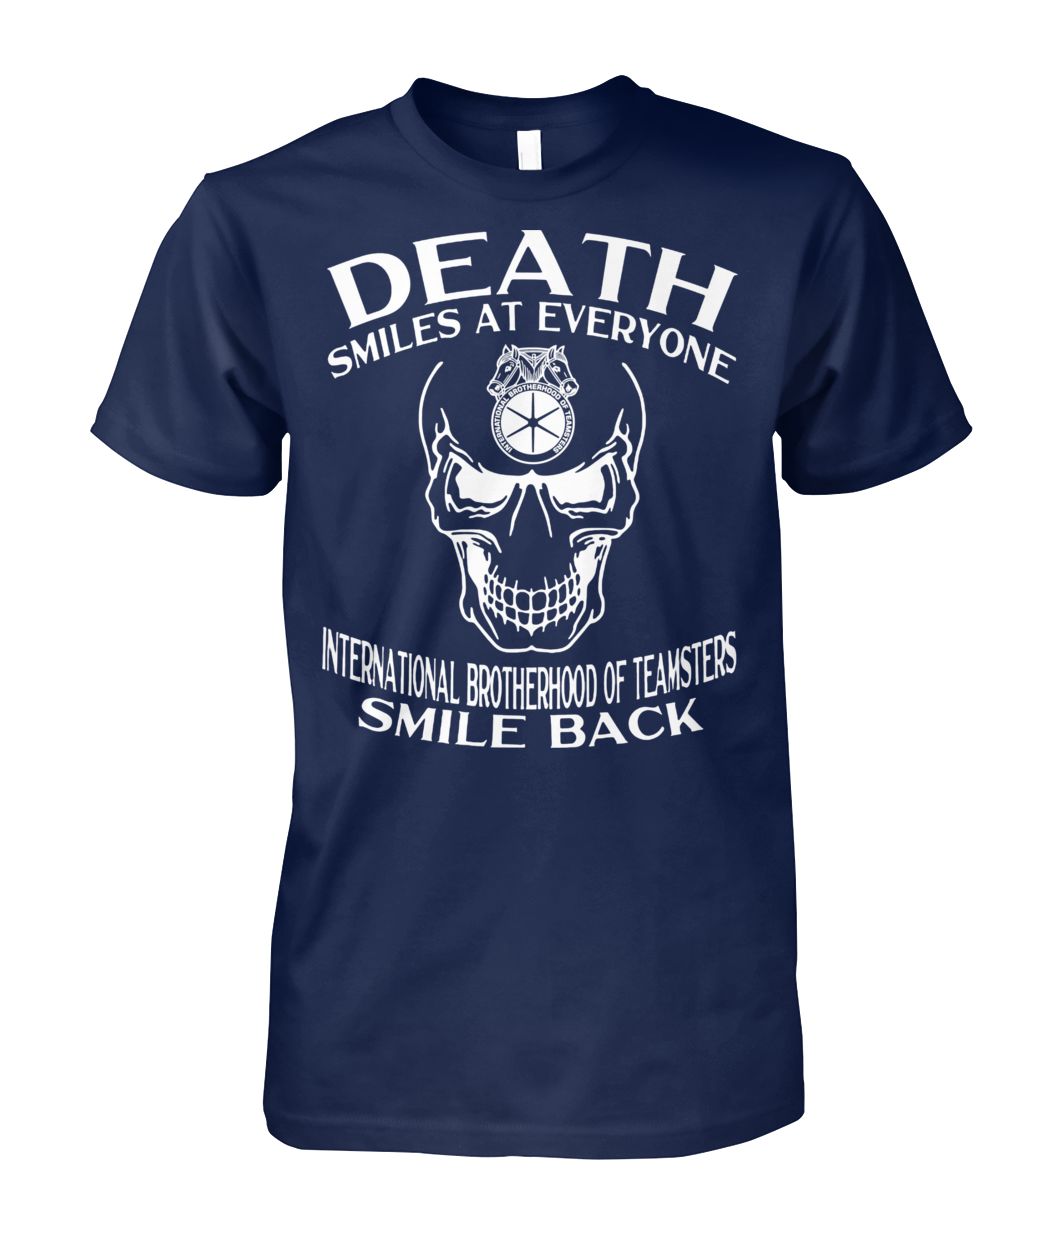 Skull death smiles at everyone international brotherhood of teamsters smile back guy shirt